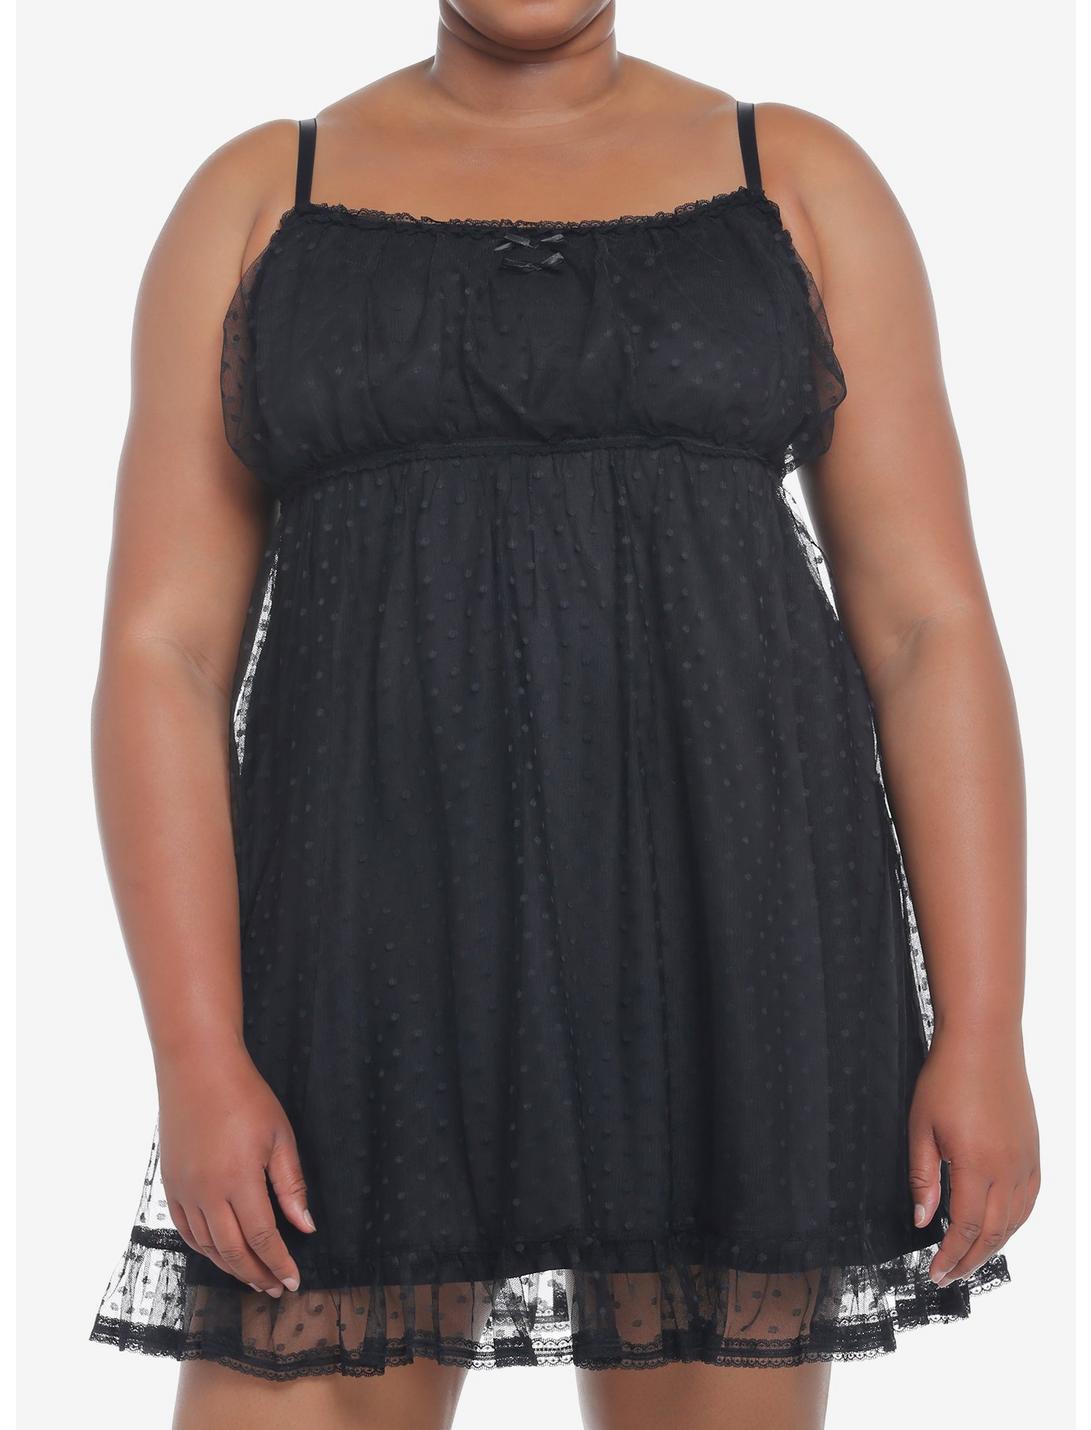 Black Empire Waist Slip Dress Plus Size, BLACK, hi-res